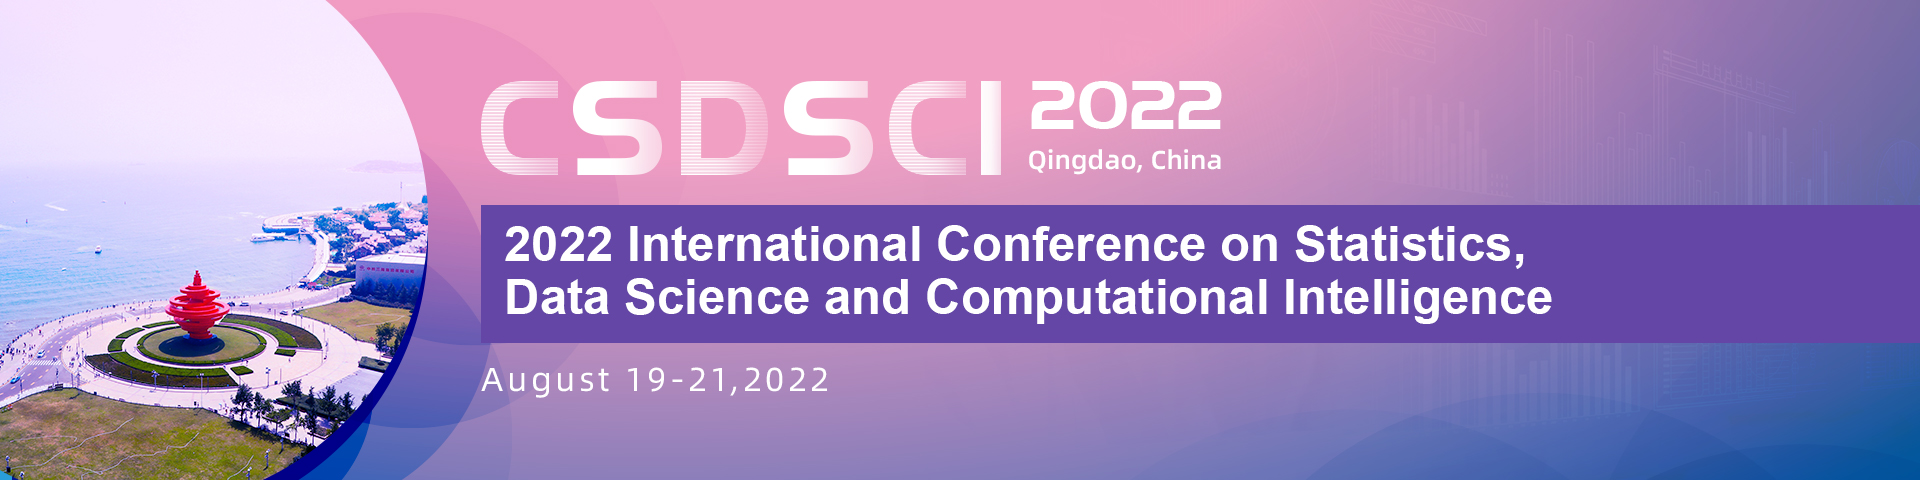 2022 International Conference on Statistics, Data Science and Computational Intelligence